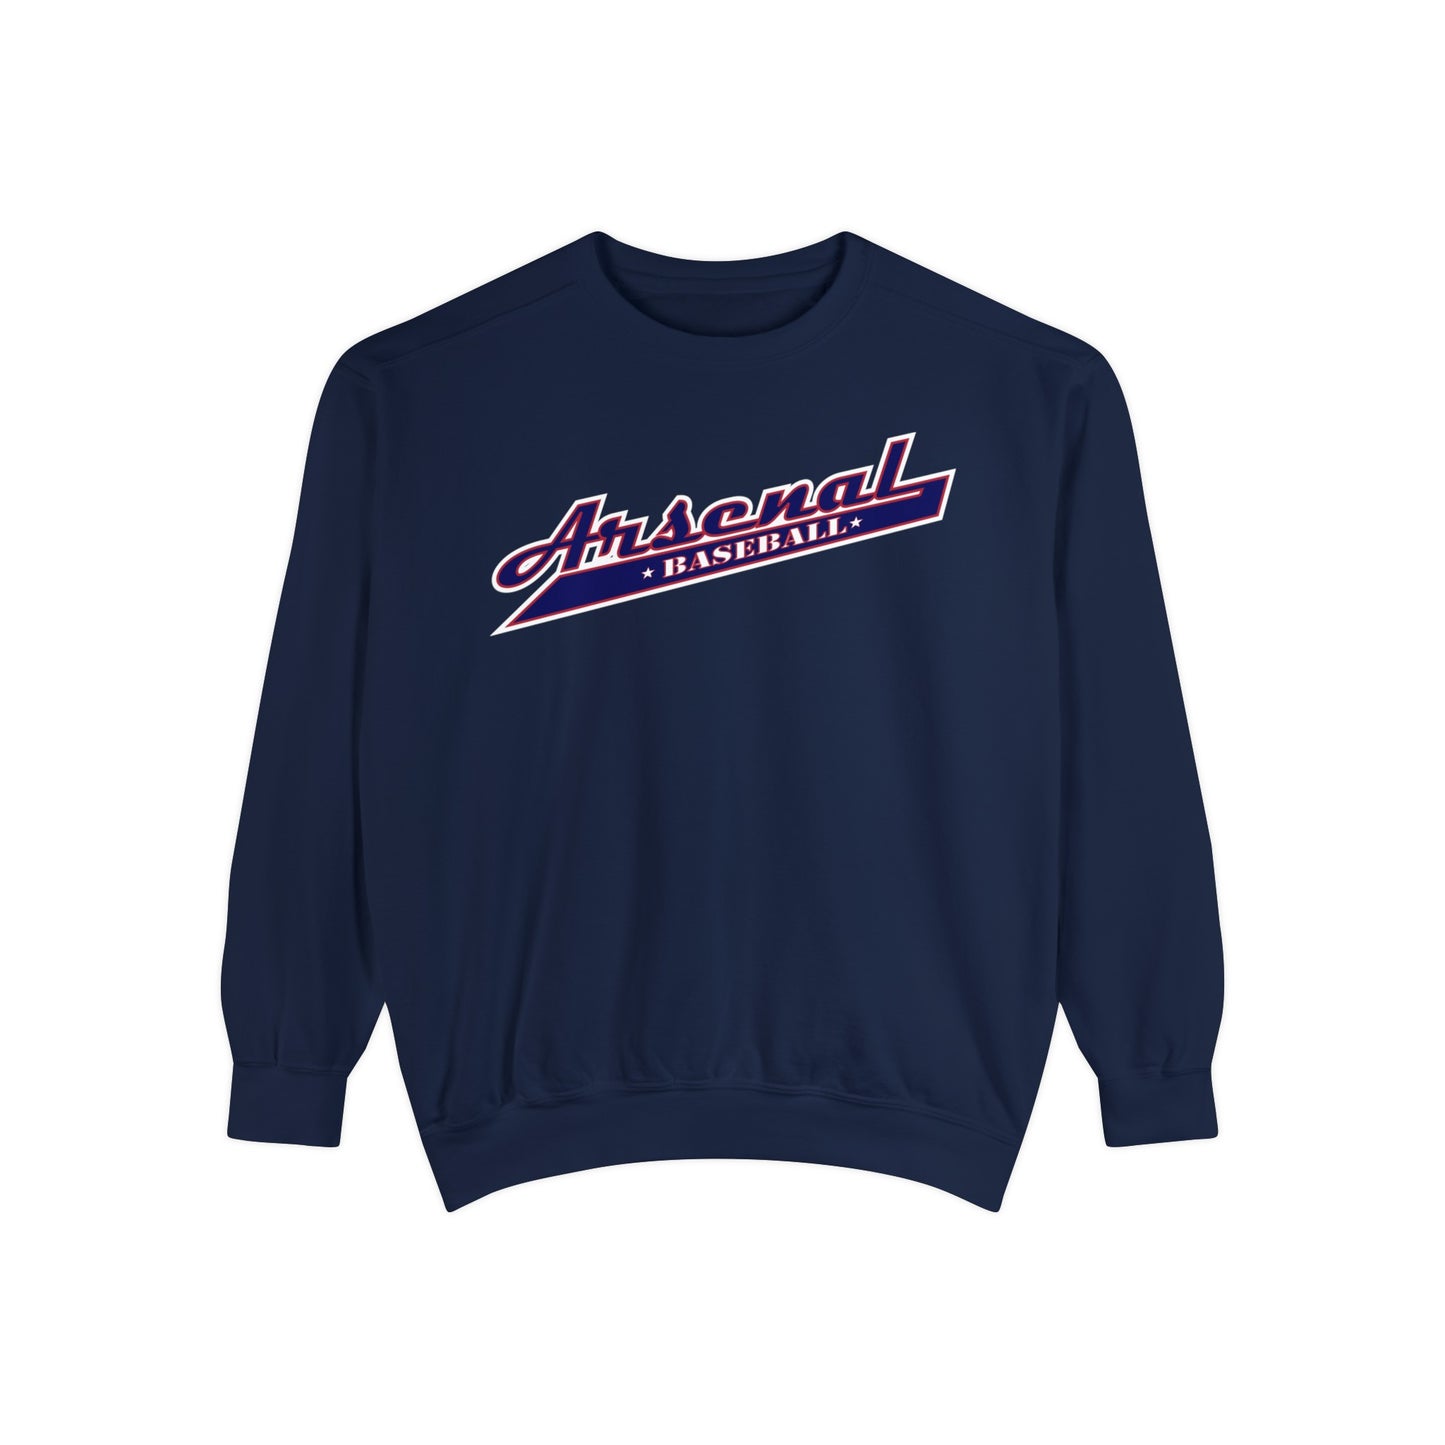 Arsenal Baseball sweatshirt by Comfort Colors